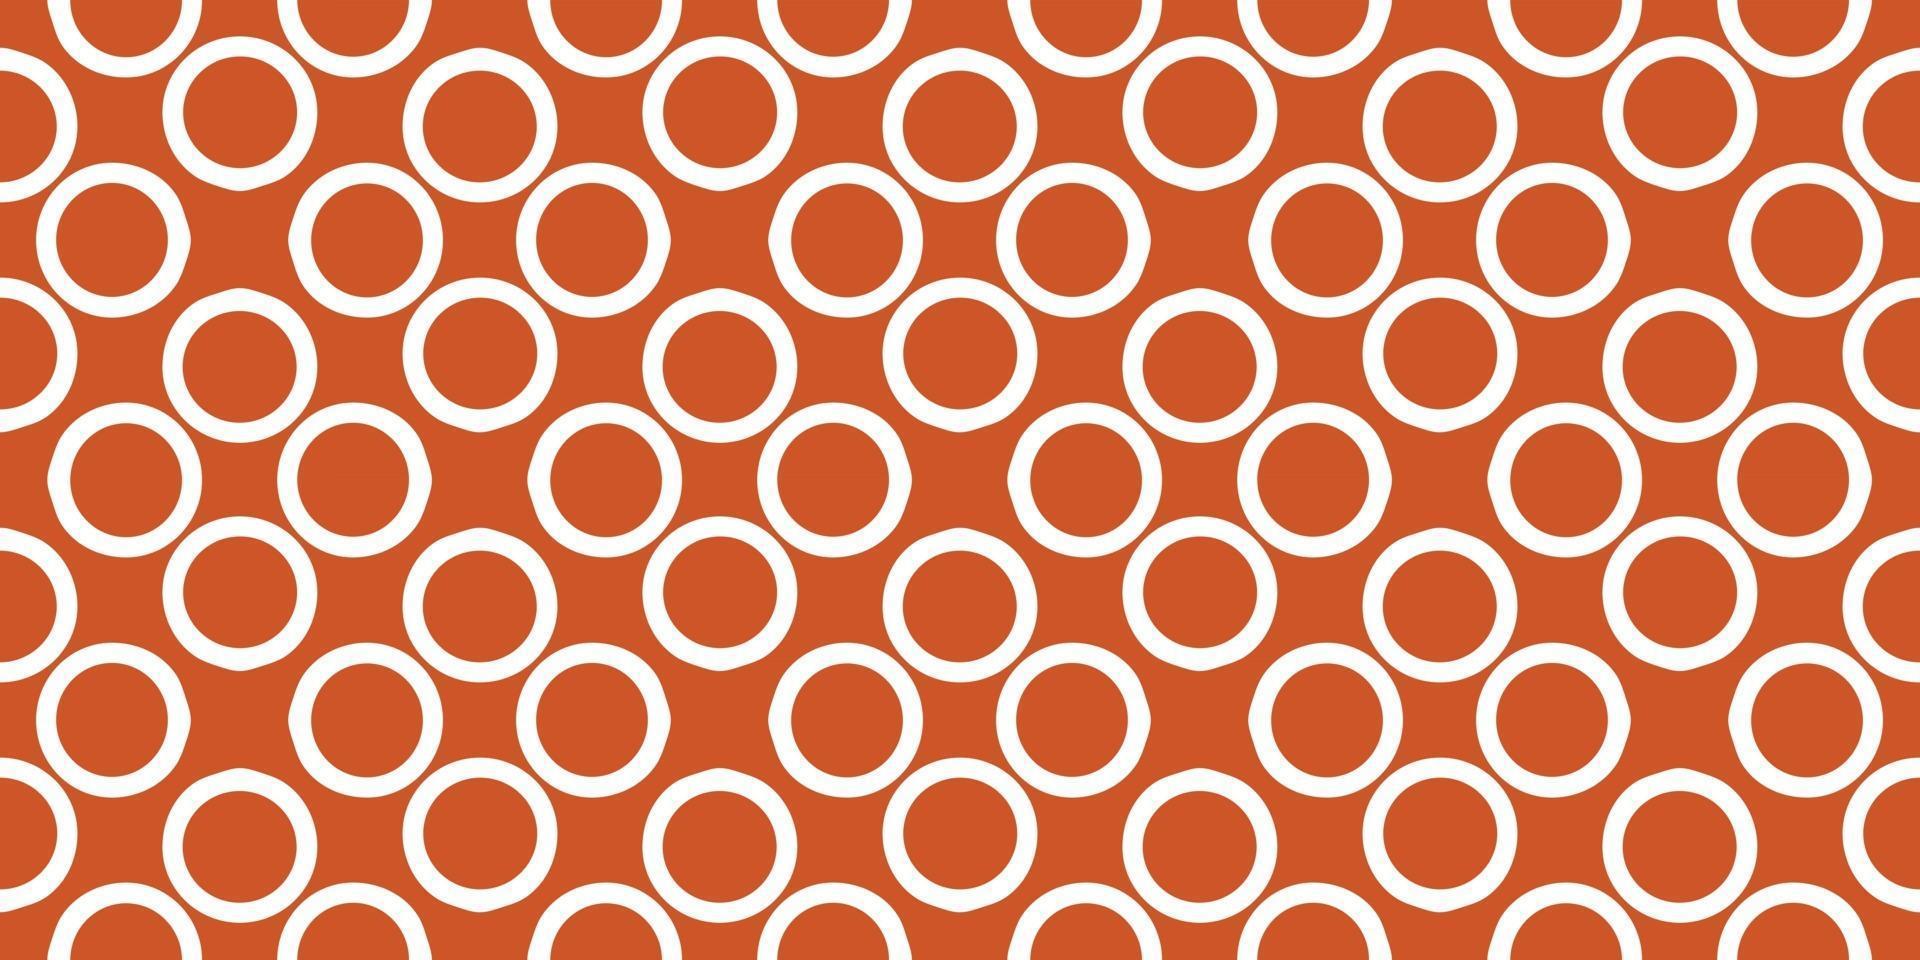 Circle pattern orange background Vector illustration